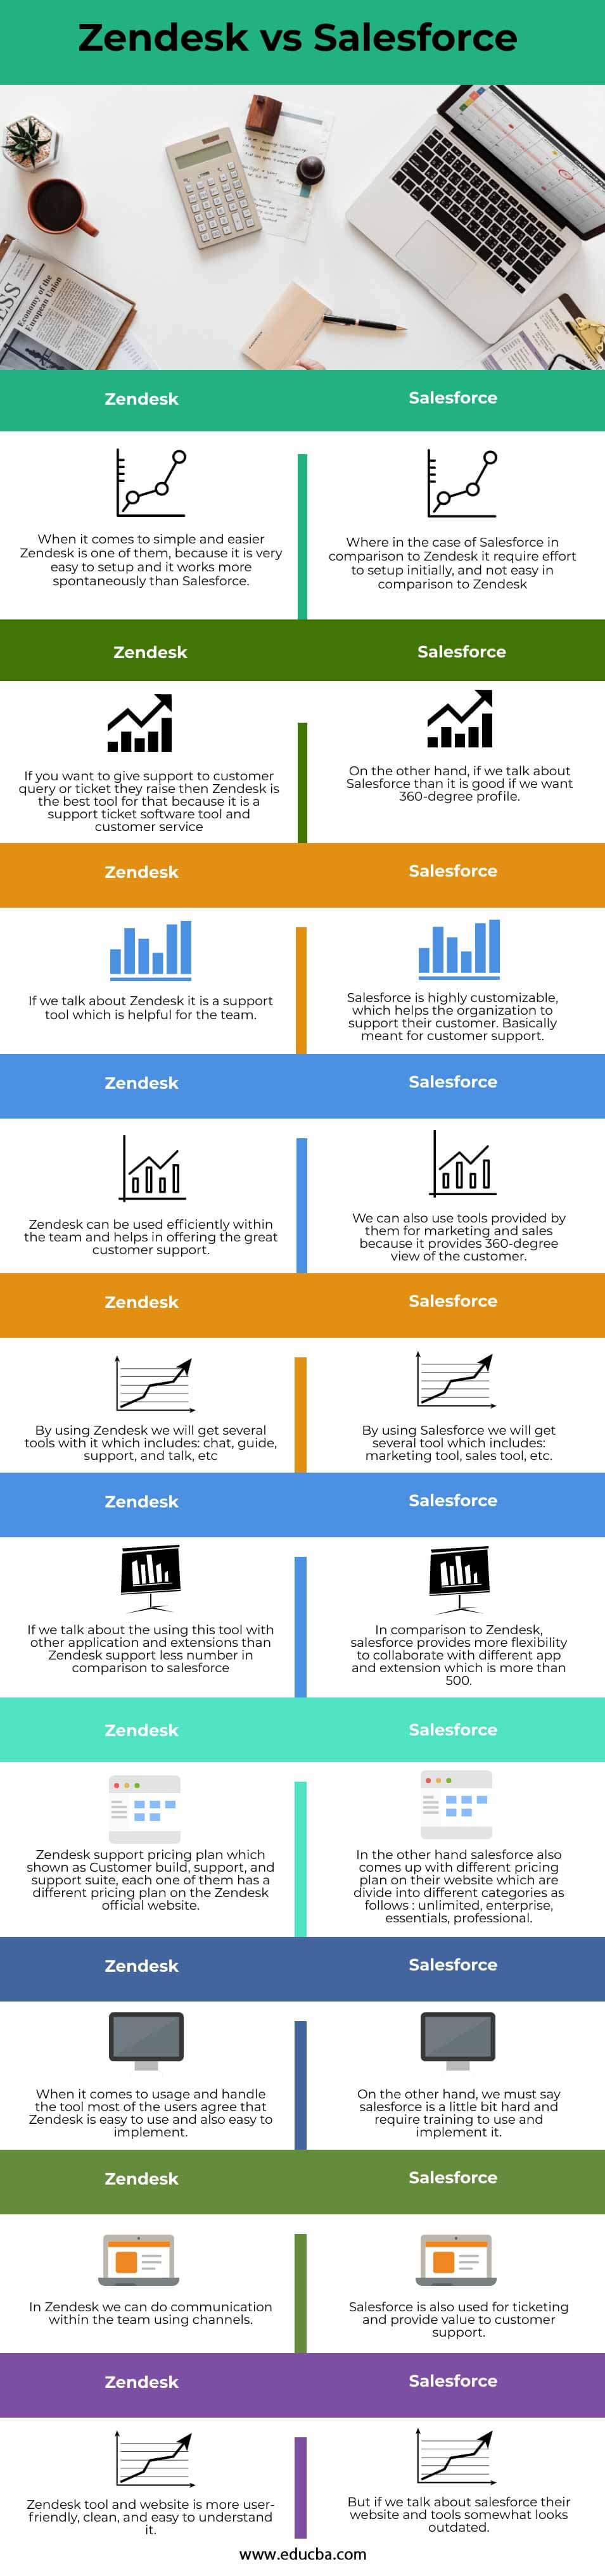 Zendesk-vs-Salesforce-info